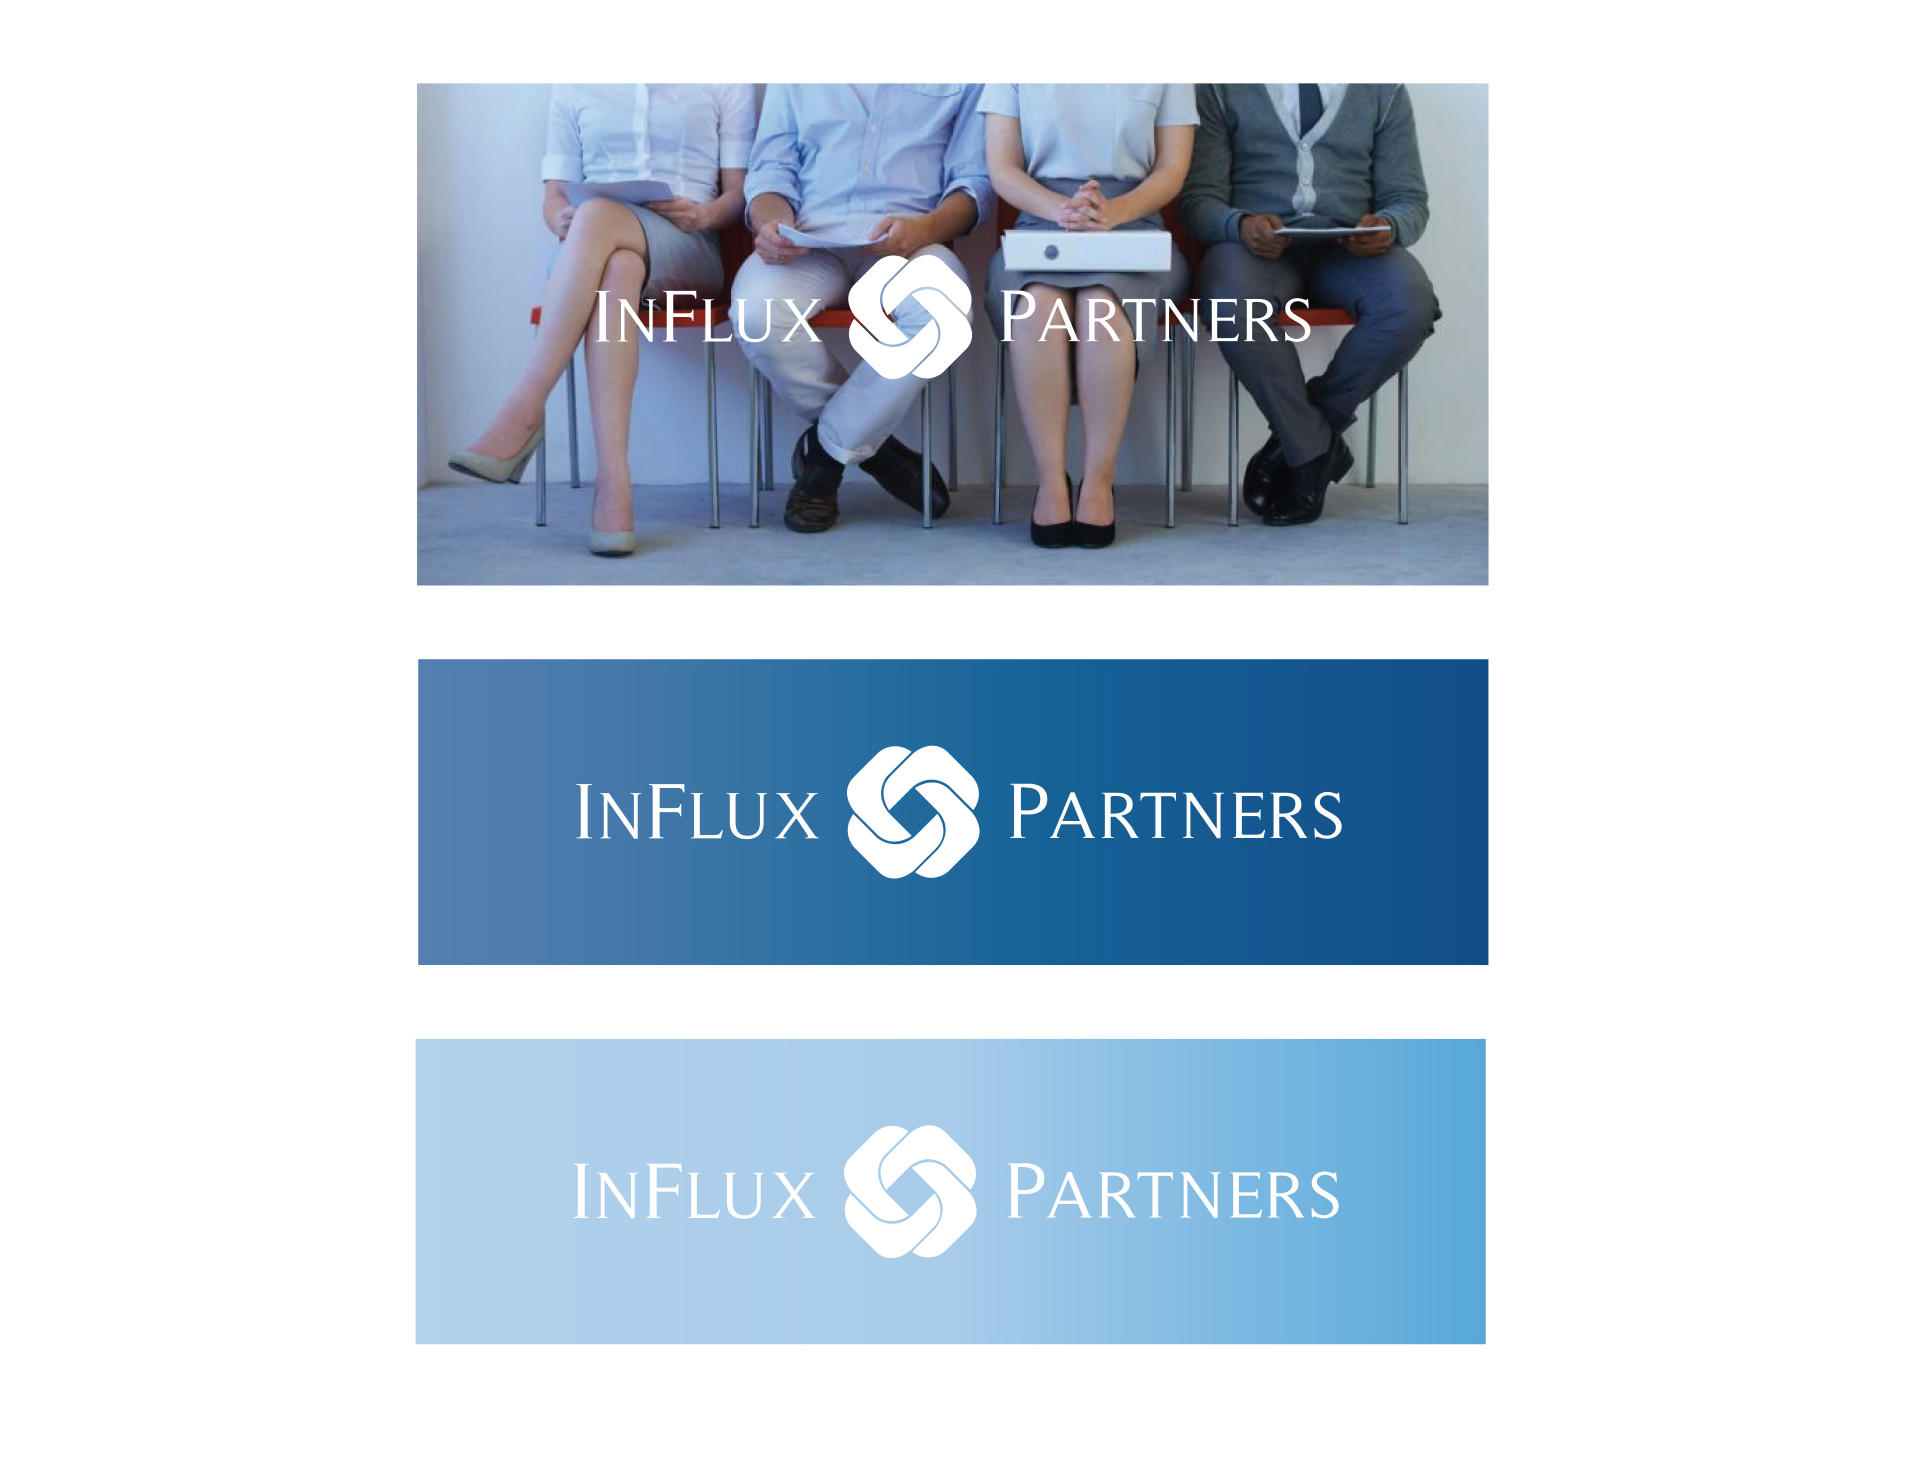 InFlux Partners